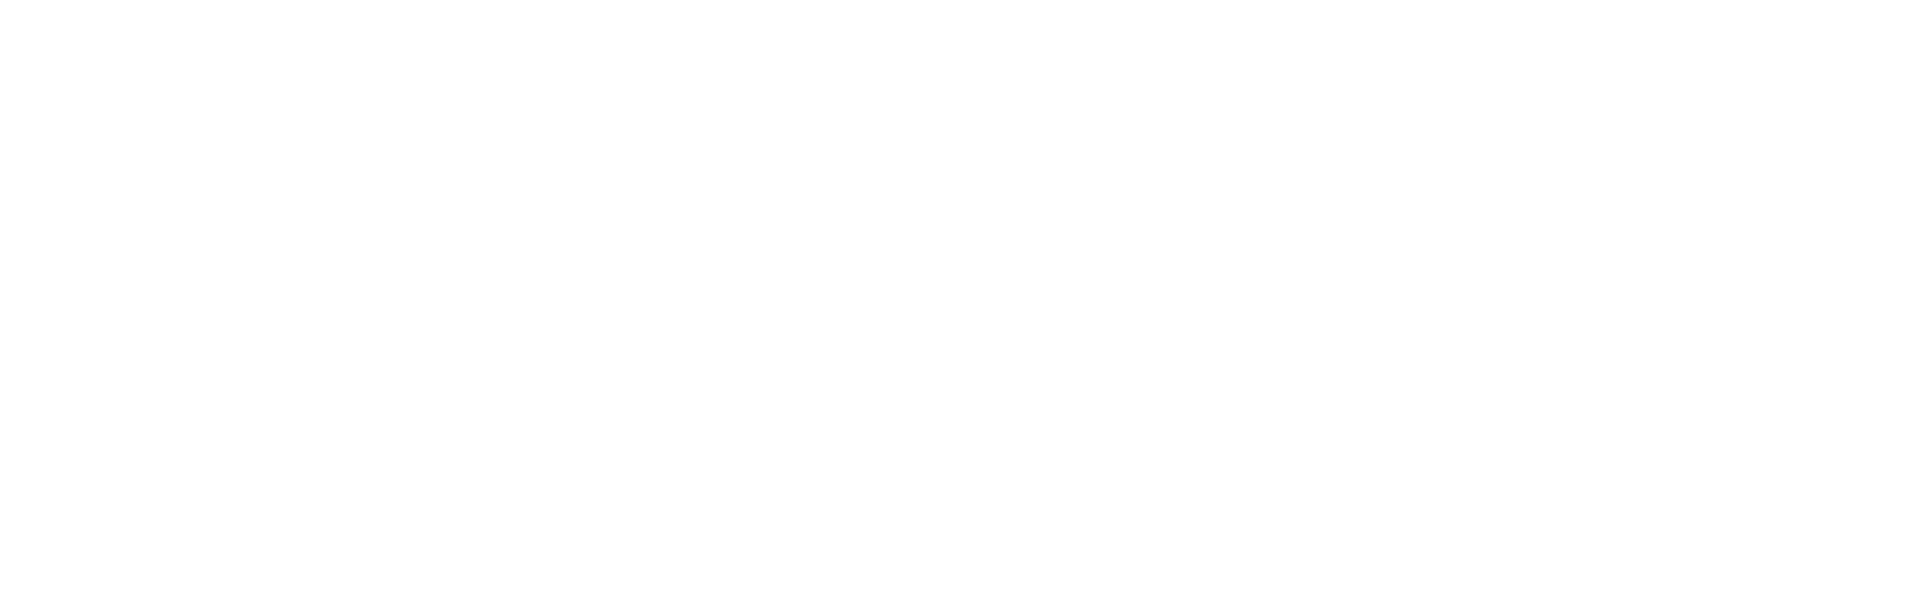 Optimized Distribution Partners Logo